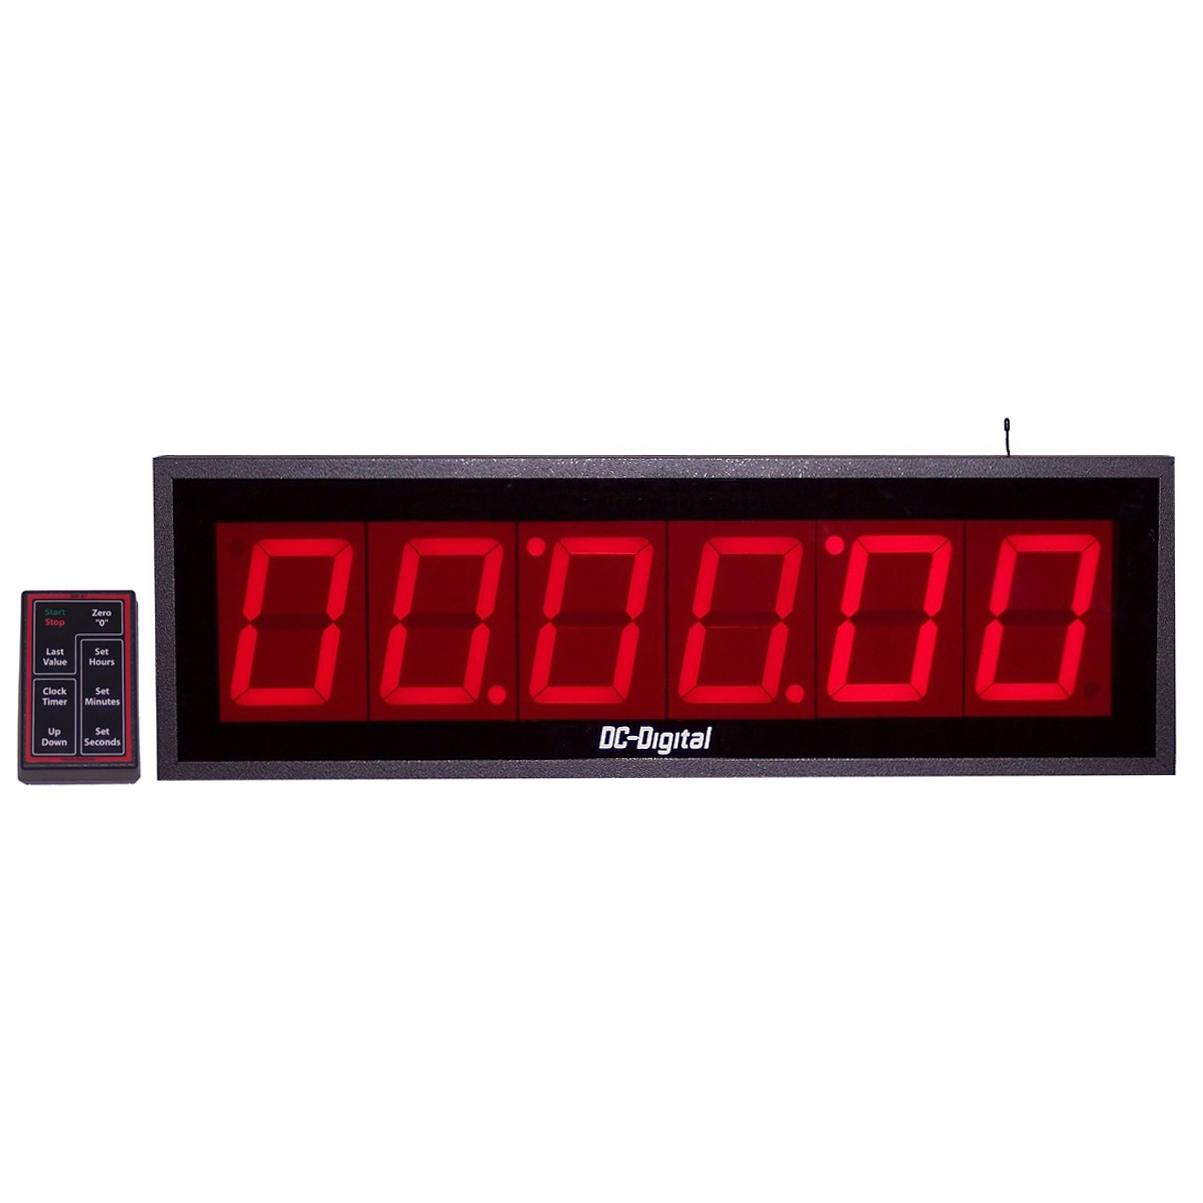 speech timer led clock